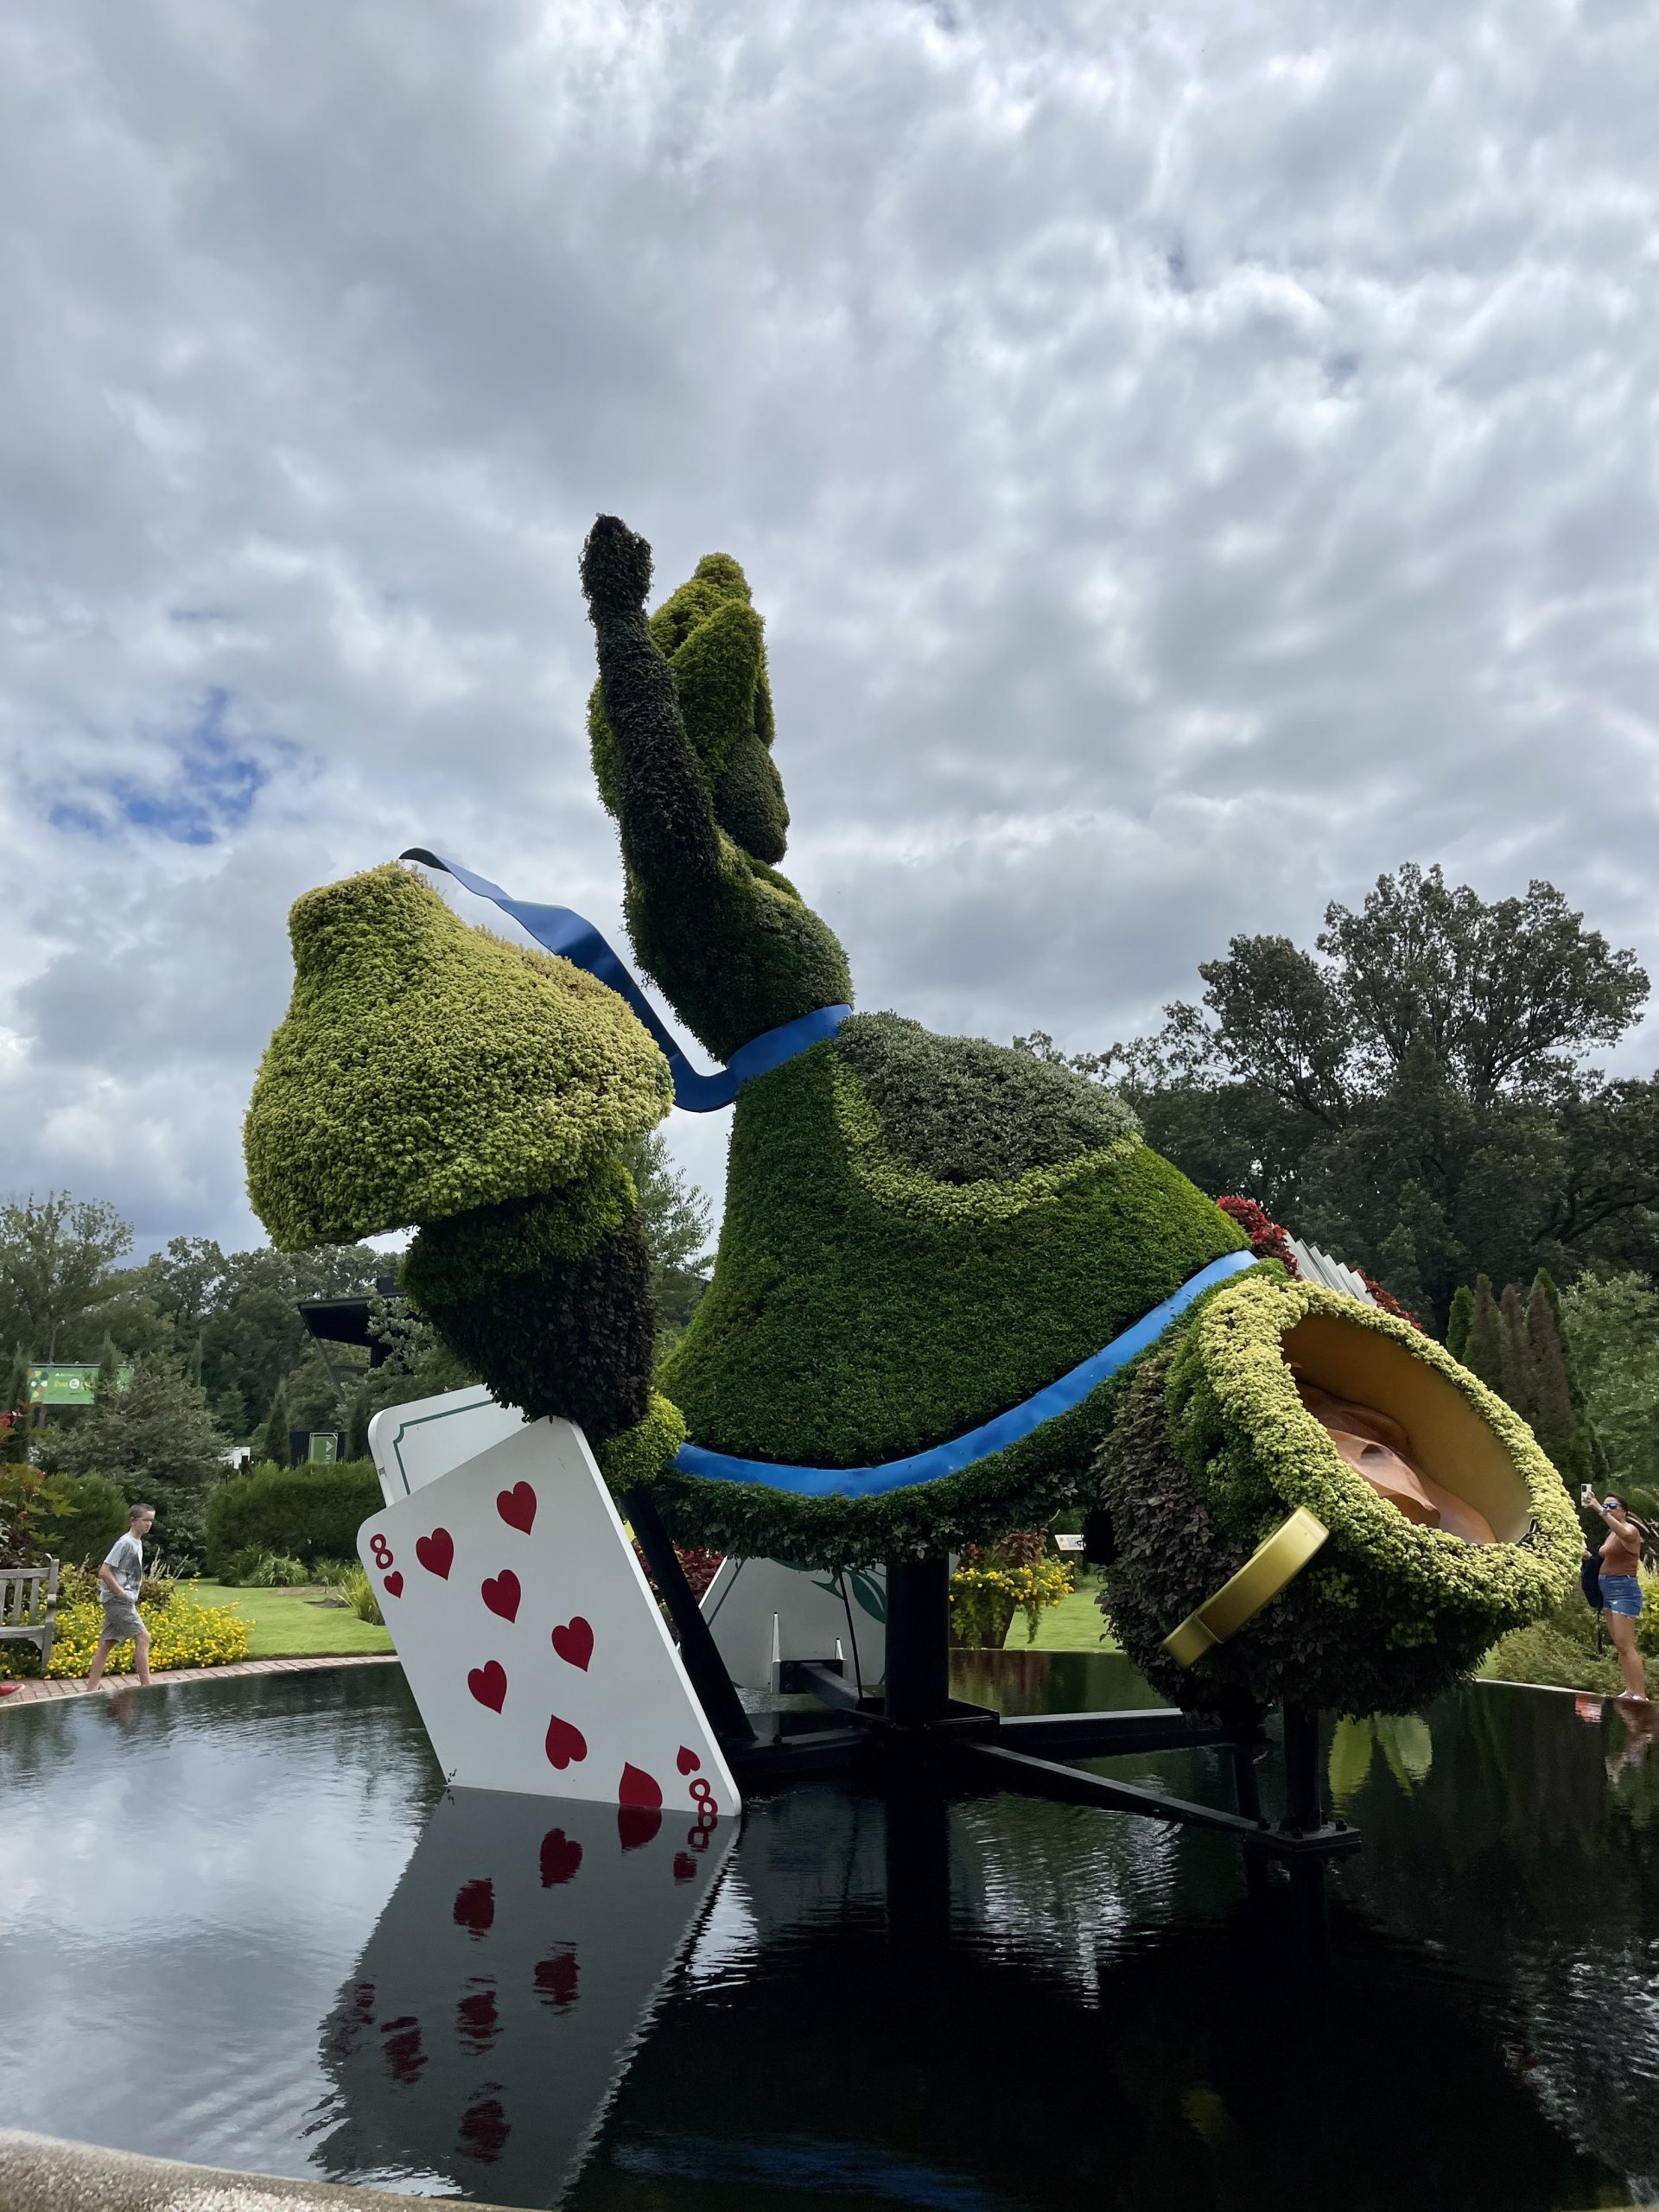 Alice exhibit turns Memphis Botanic Garden into Wonderland